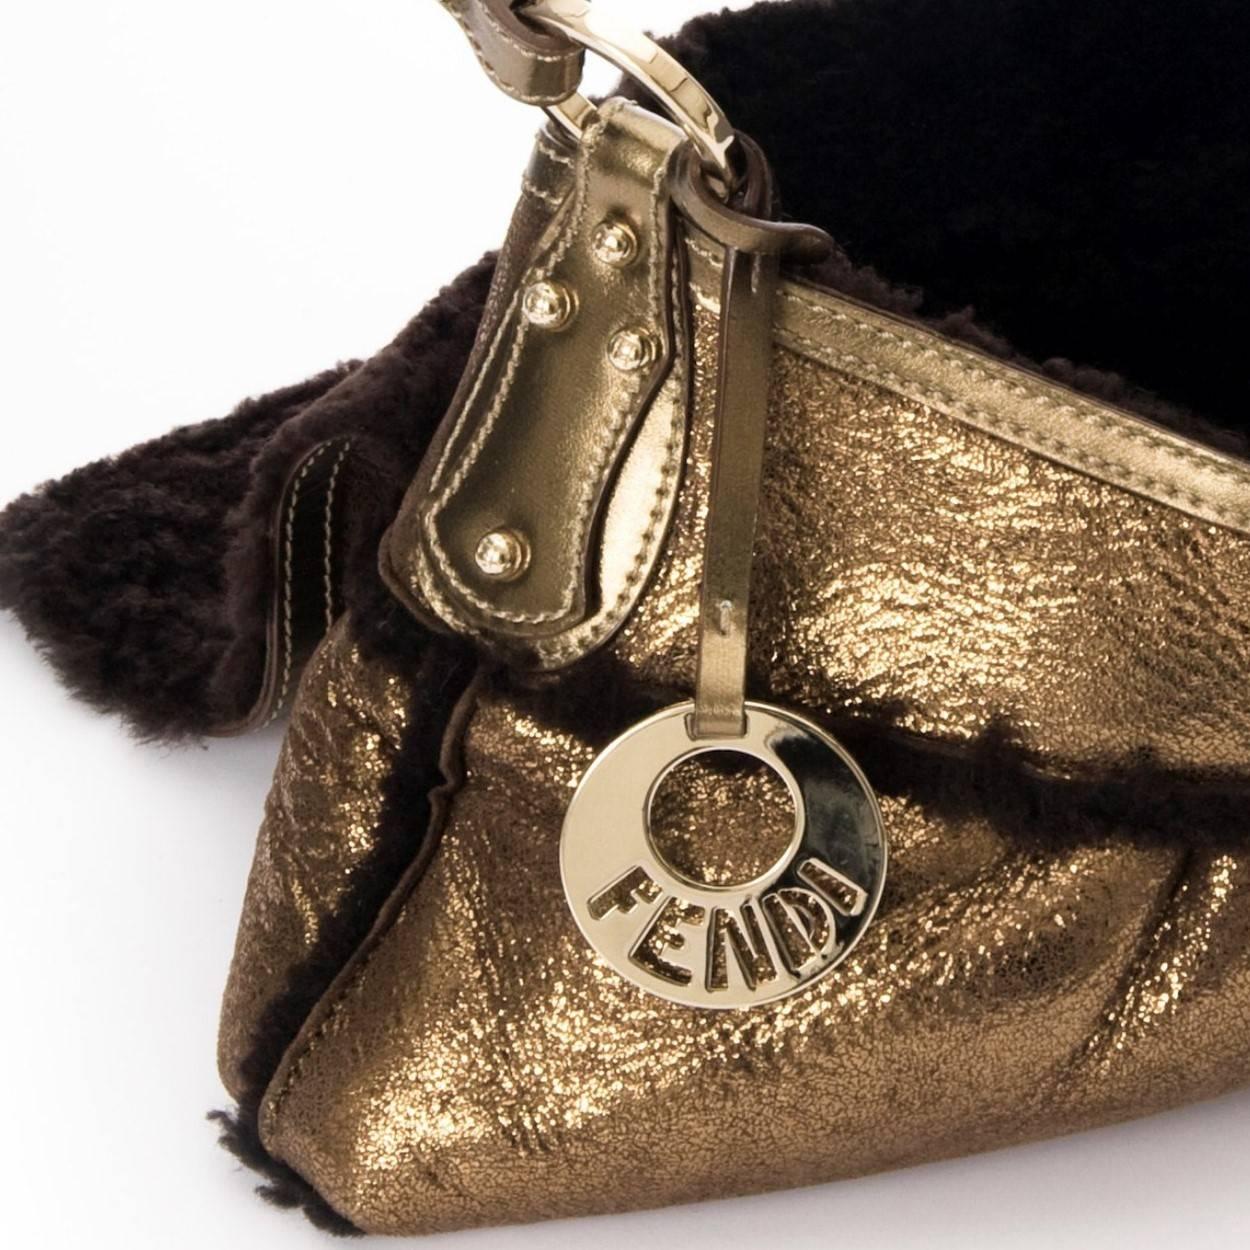 New Fendi Shearling Bronze Baguette Bag With Fendi Squirrel Purse Charm For Sale 7